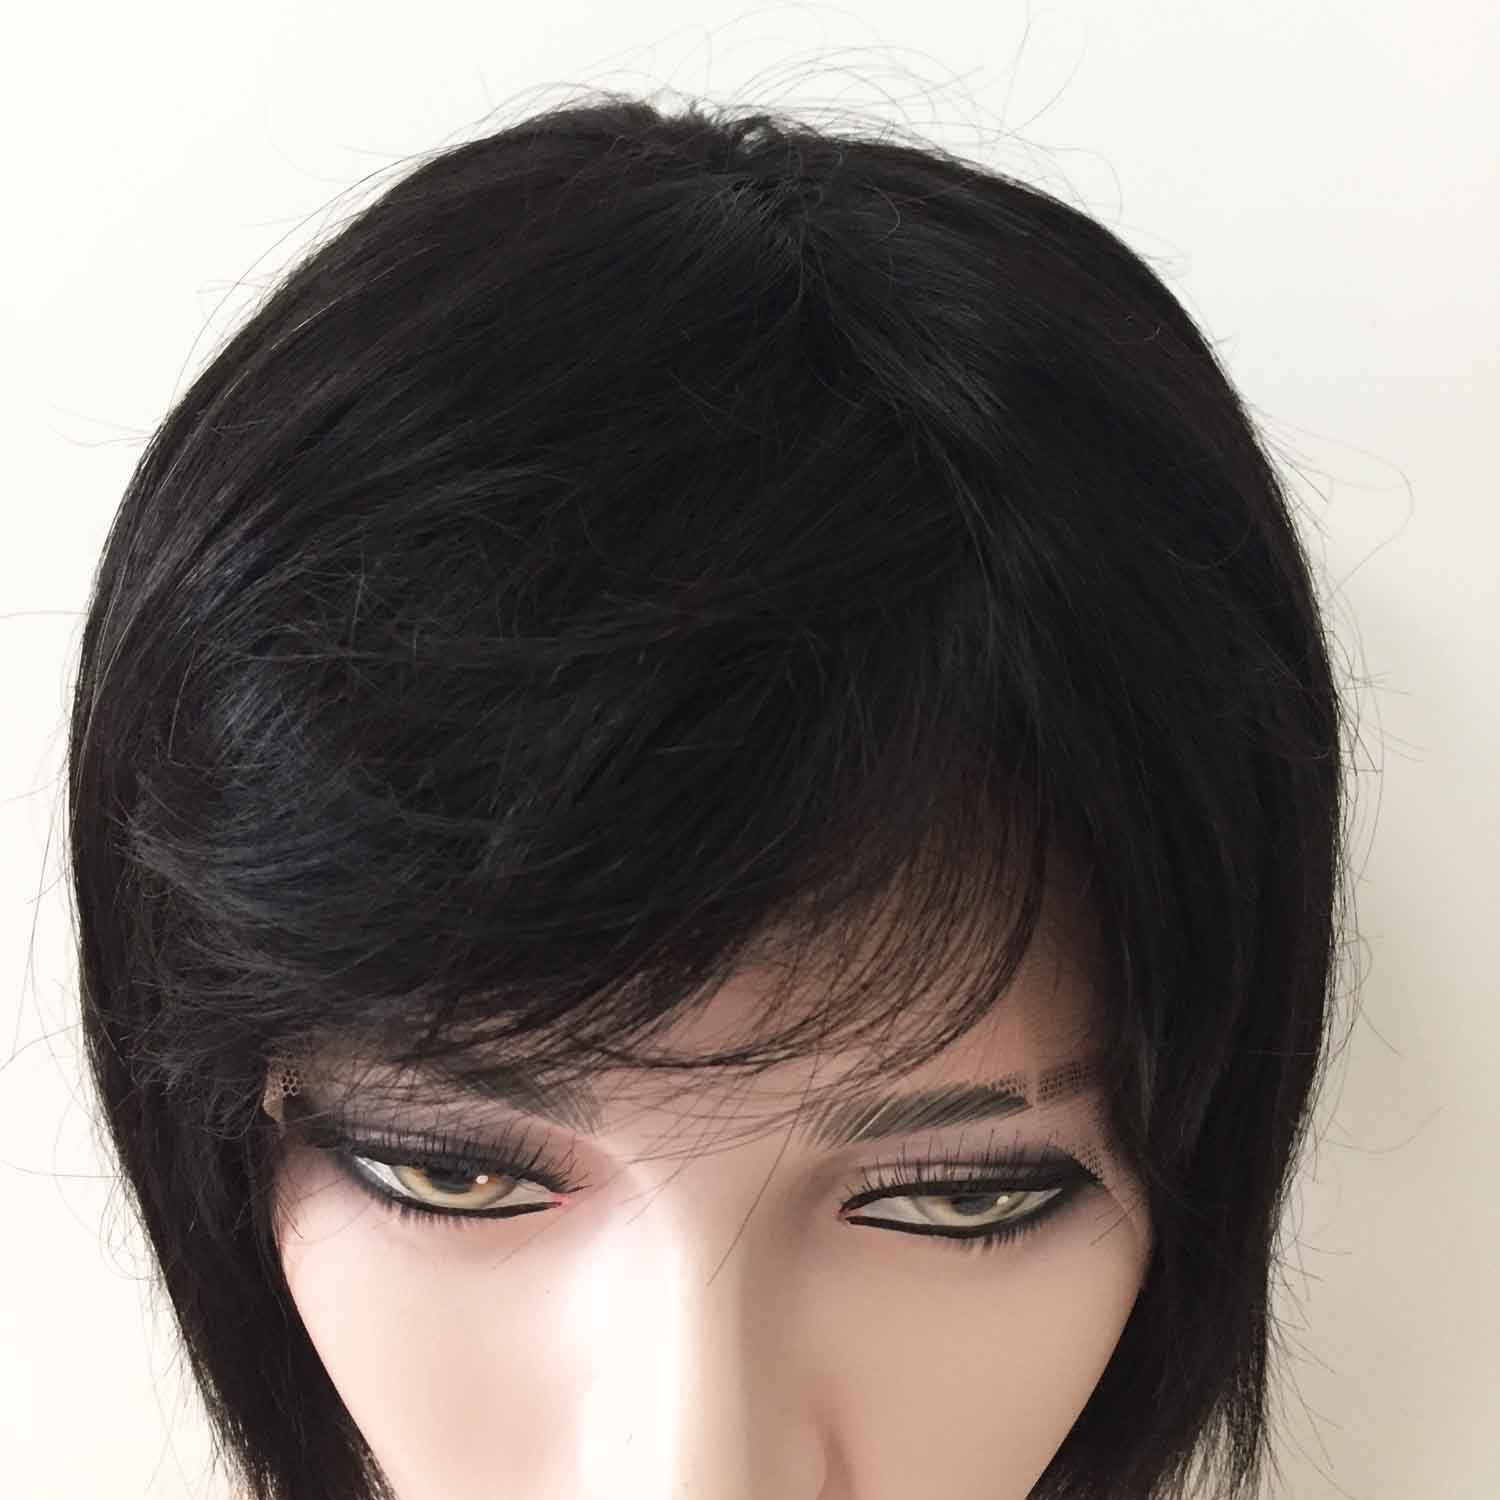 nevermindyrhead Women Black Human Hair Full Lace Short Straight Fringe Bangs Wig